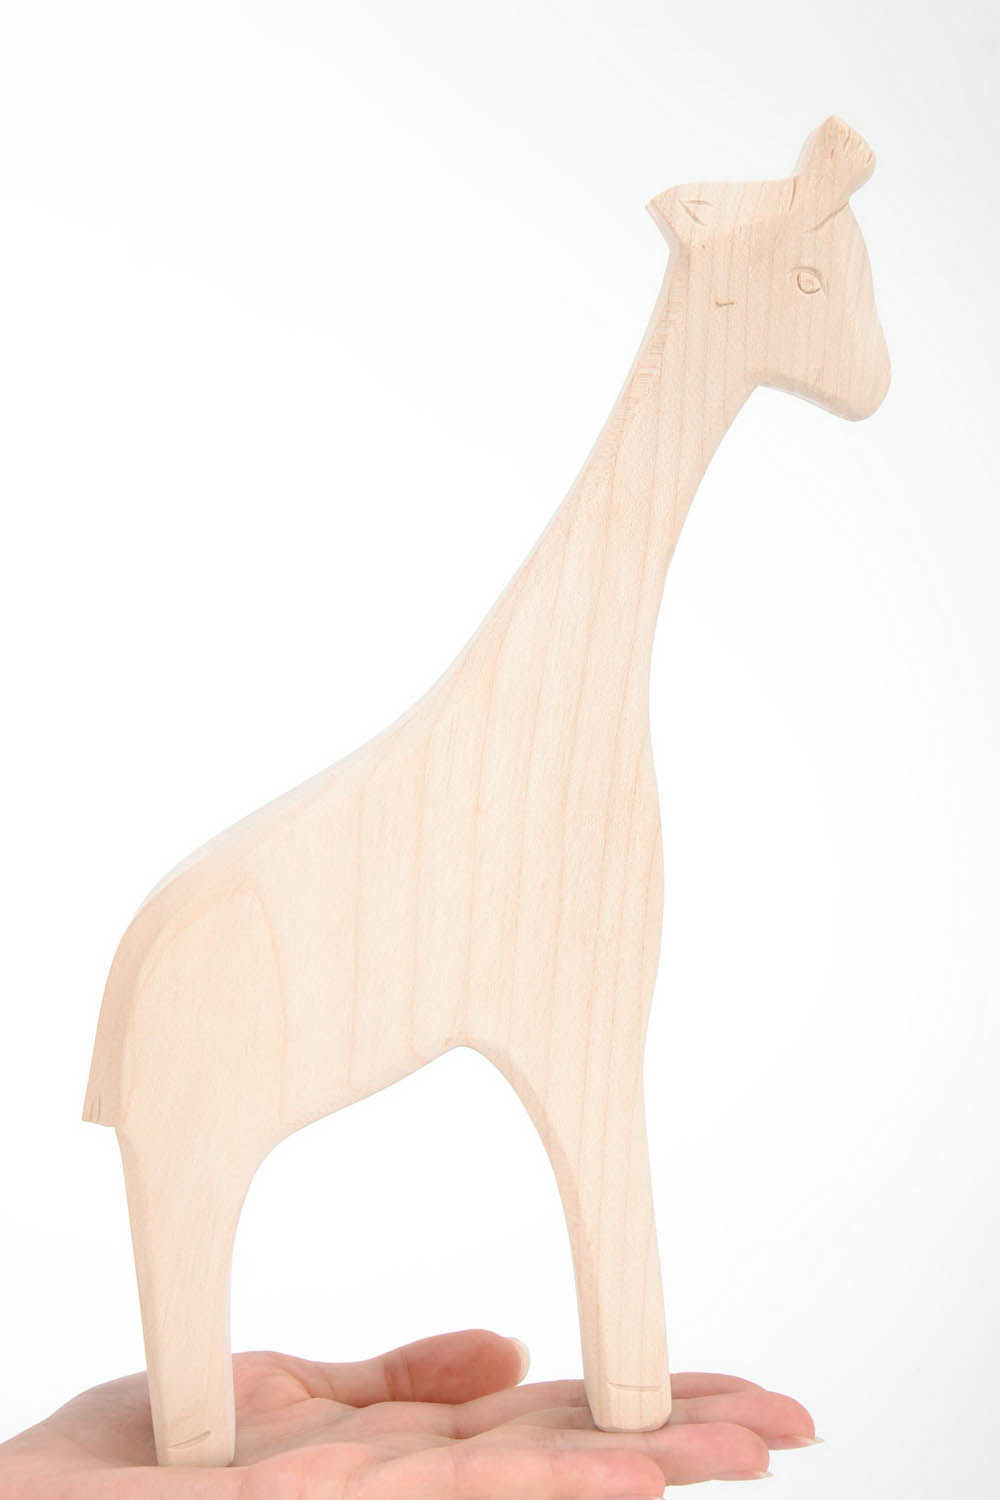 Jouet artisanal réalisé en bois Girafe photo 4